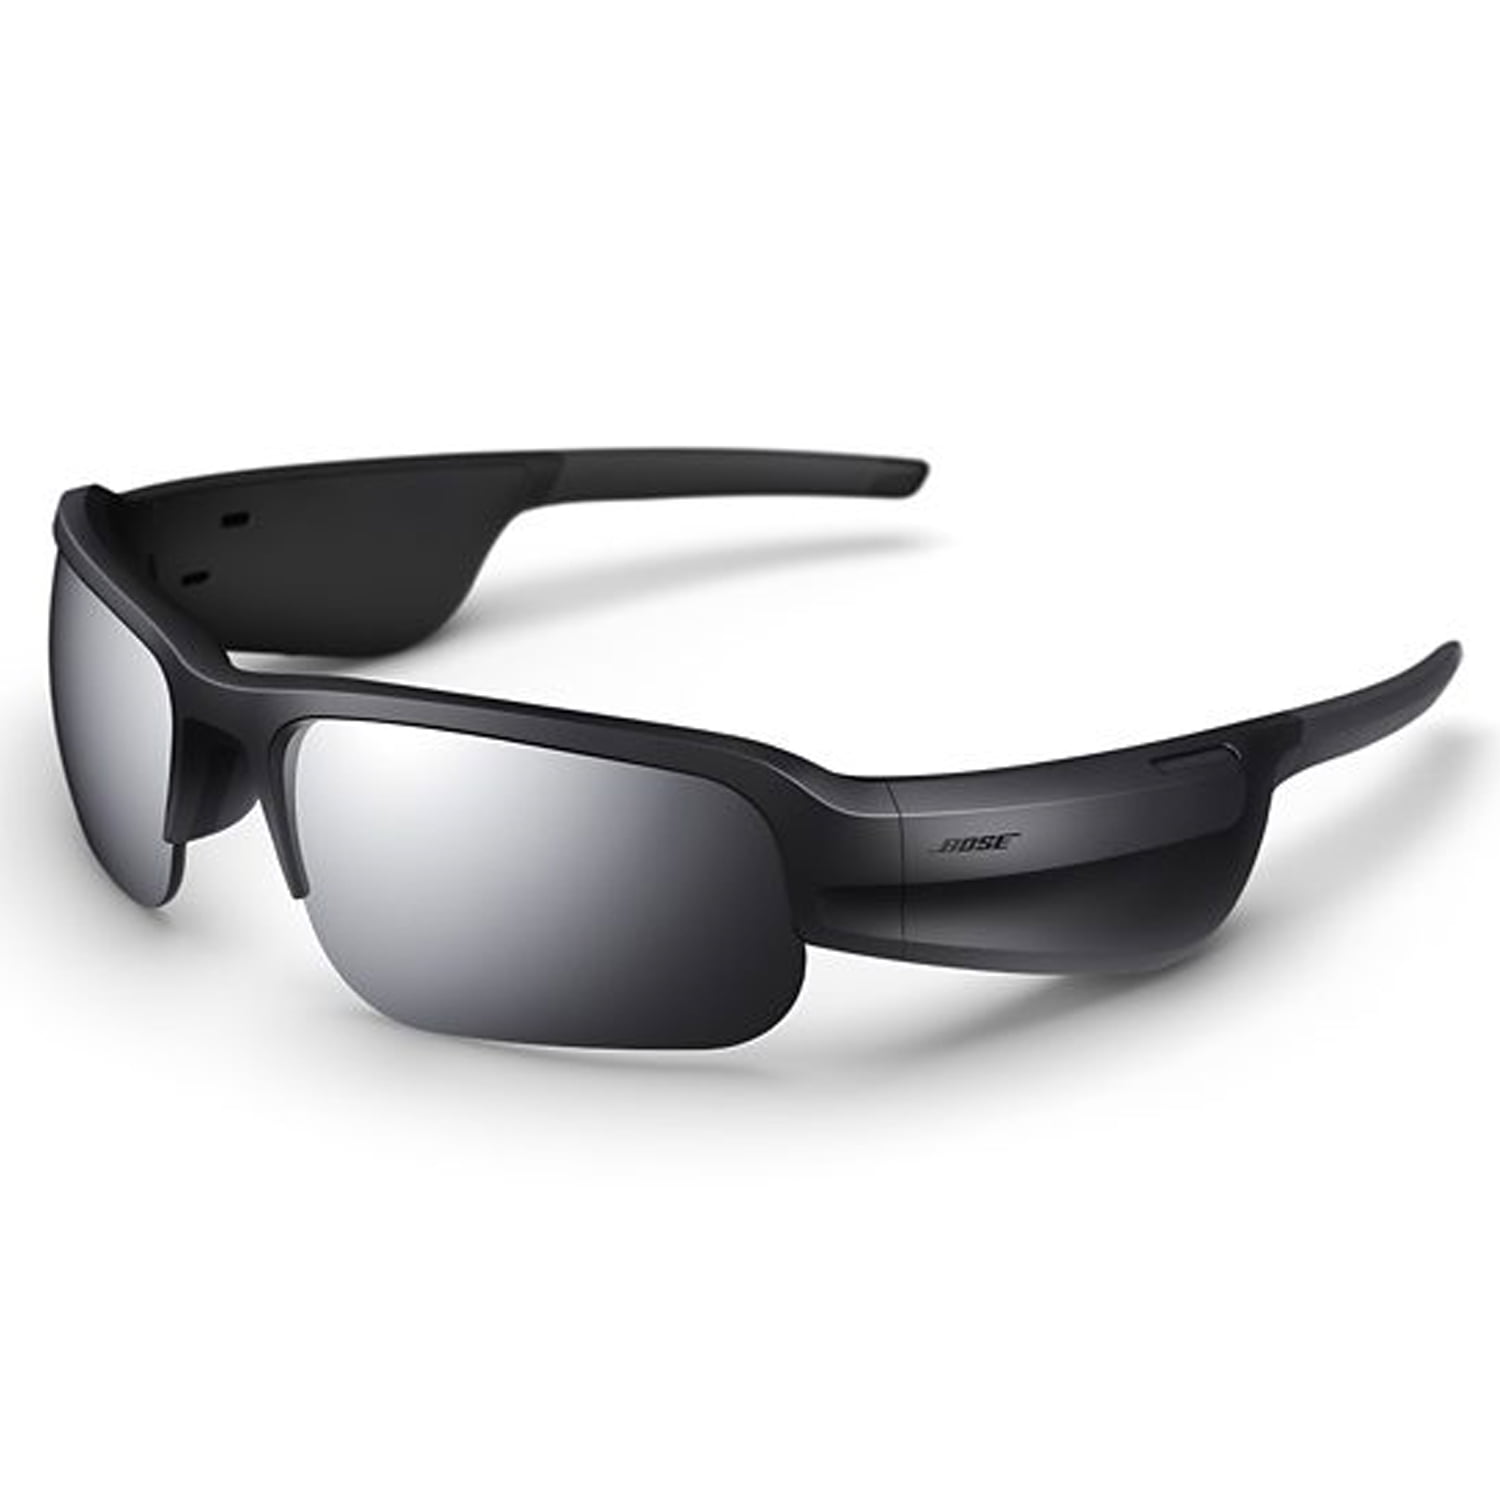 10 Best Bluetooth Sunglasses of 2022 Audio Sunglasses Reviews